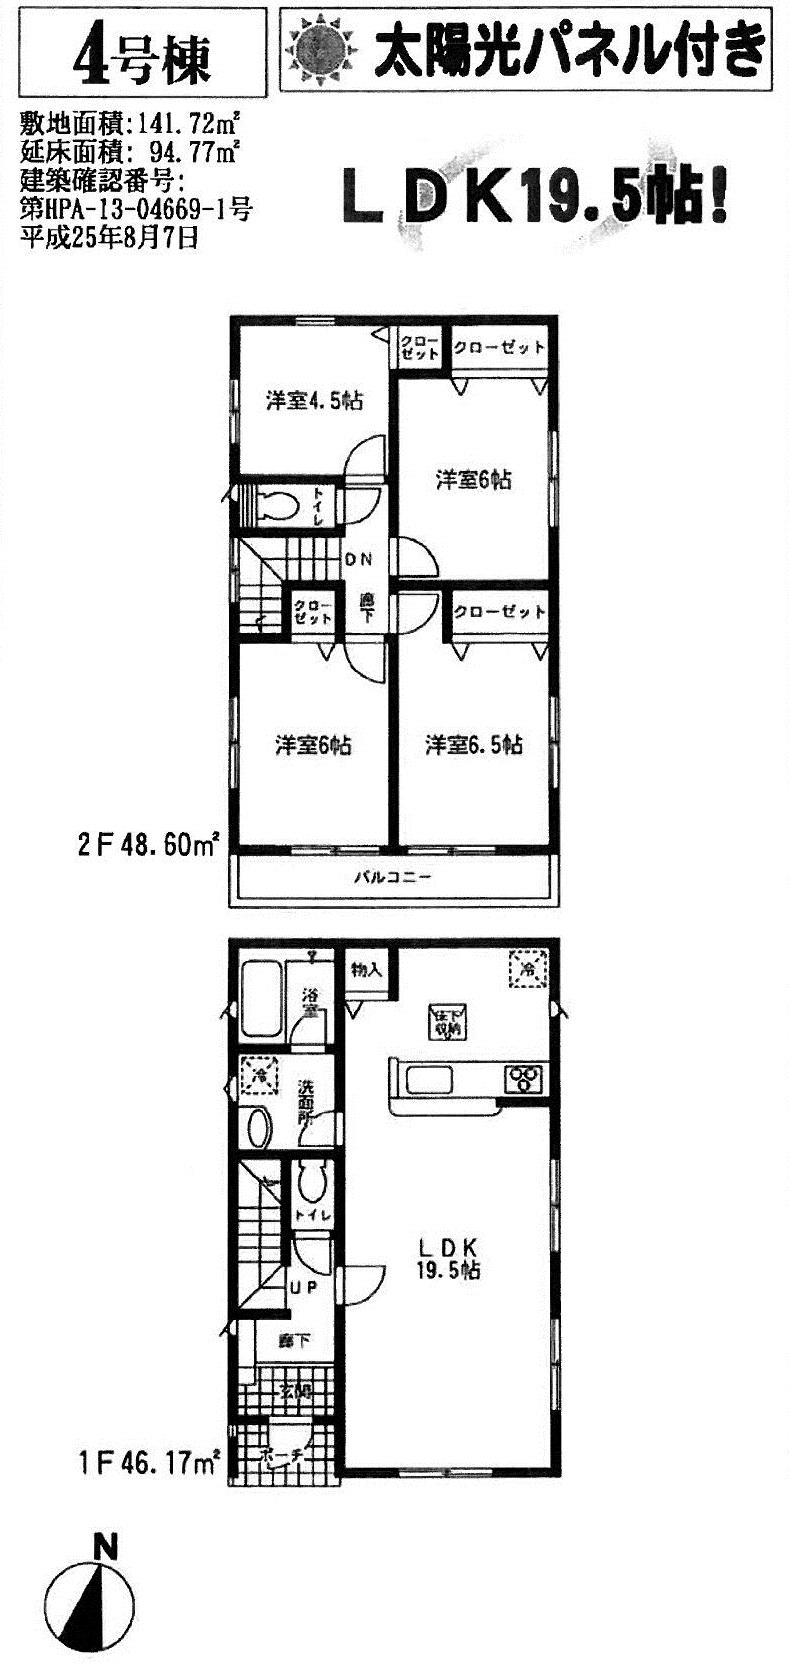 Floor plan. (4 Building), Price 19,800,000 yen, 4LDK, Land area 141.72 sq m , Building area 94.77 sq m